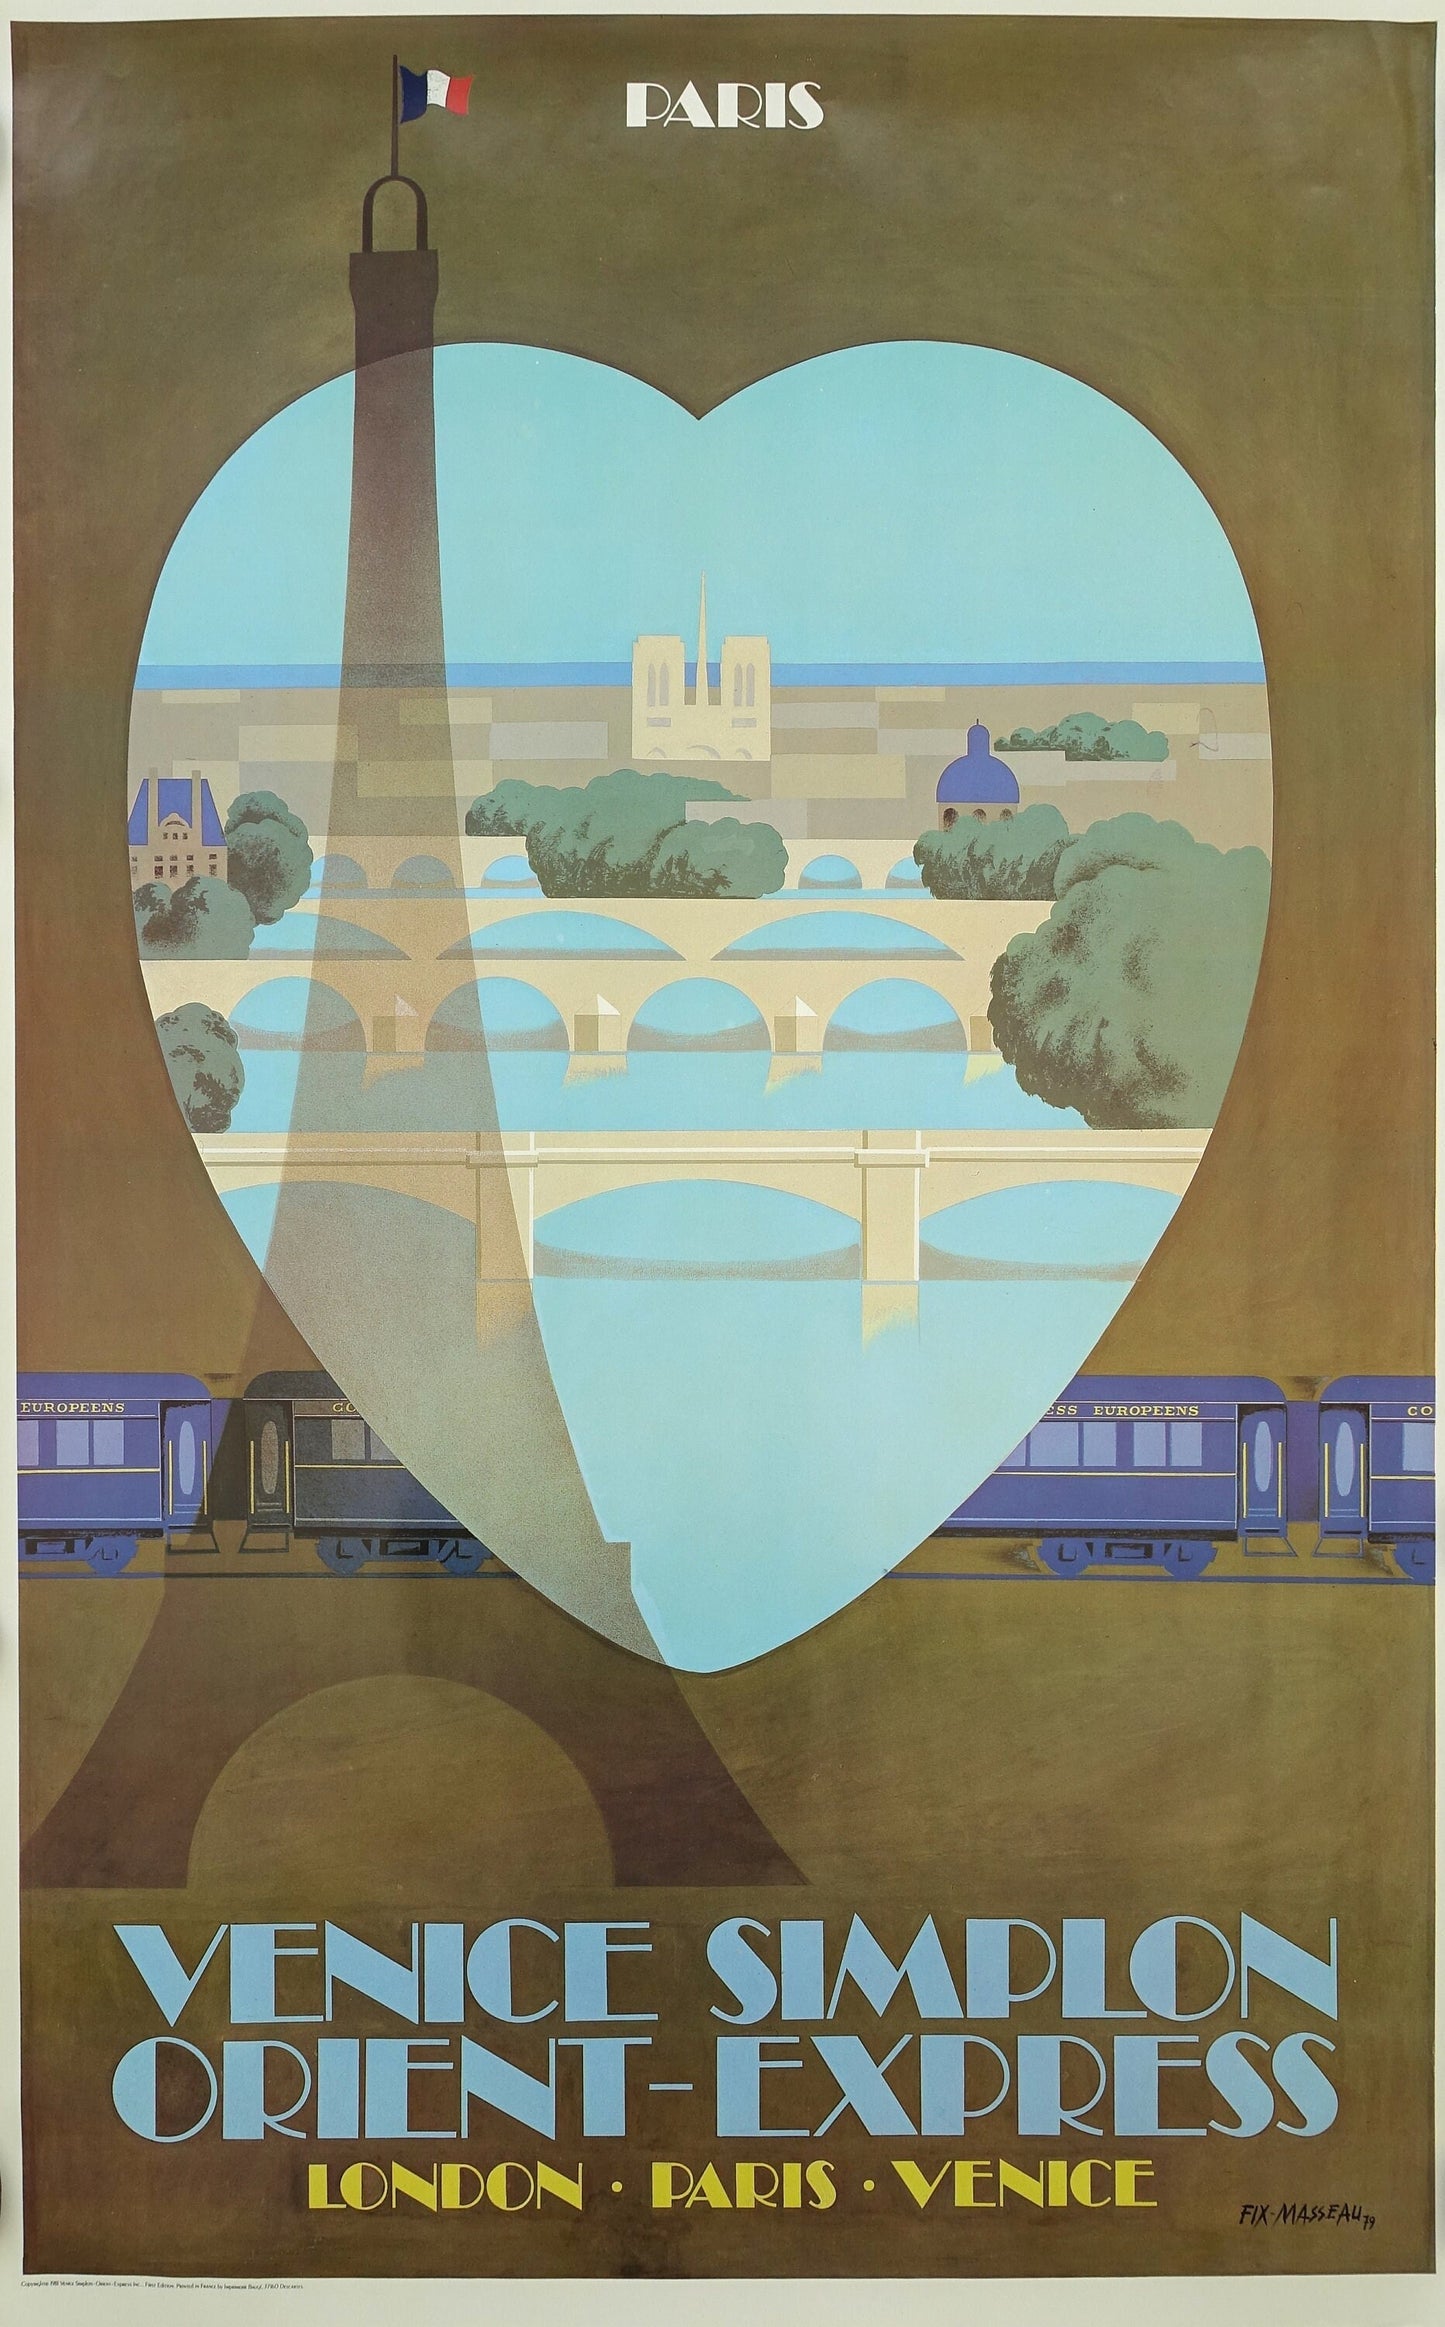 1981 Venice-Simplon Orient-Express Paris - Original Vintage Poster